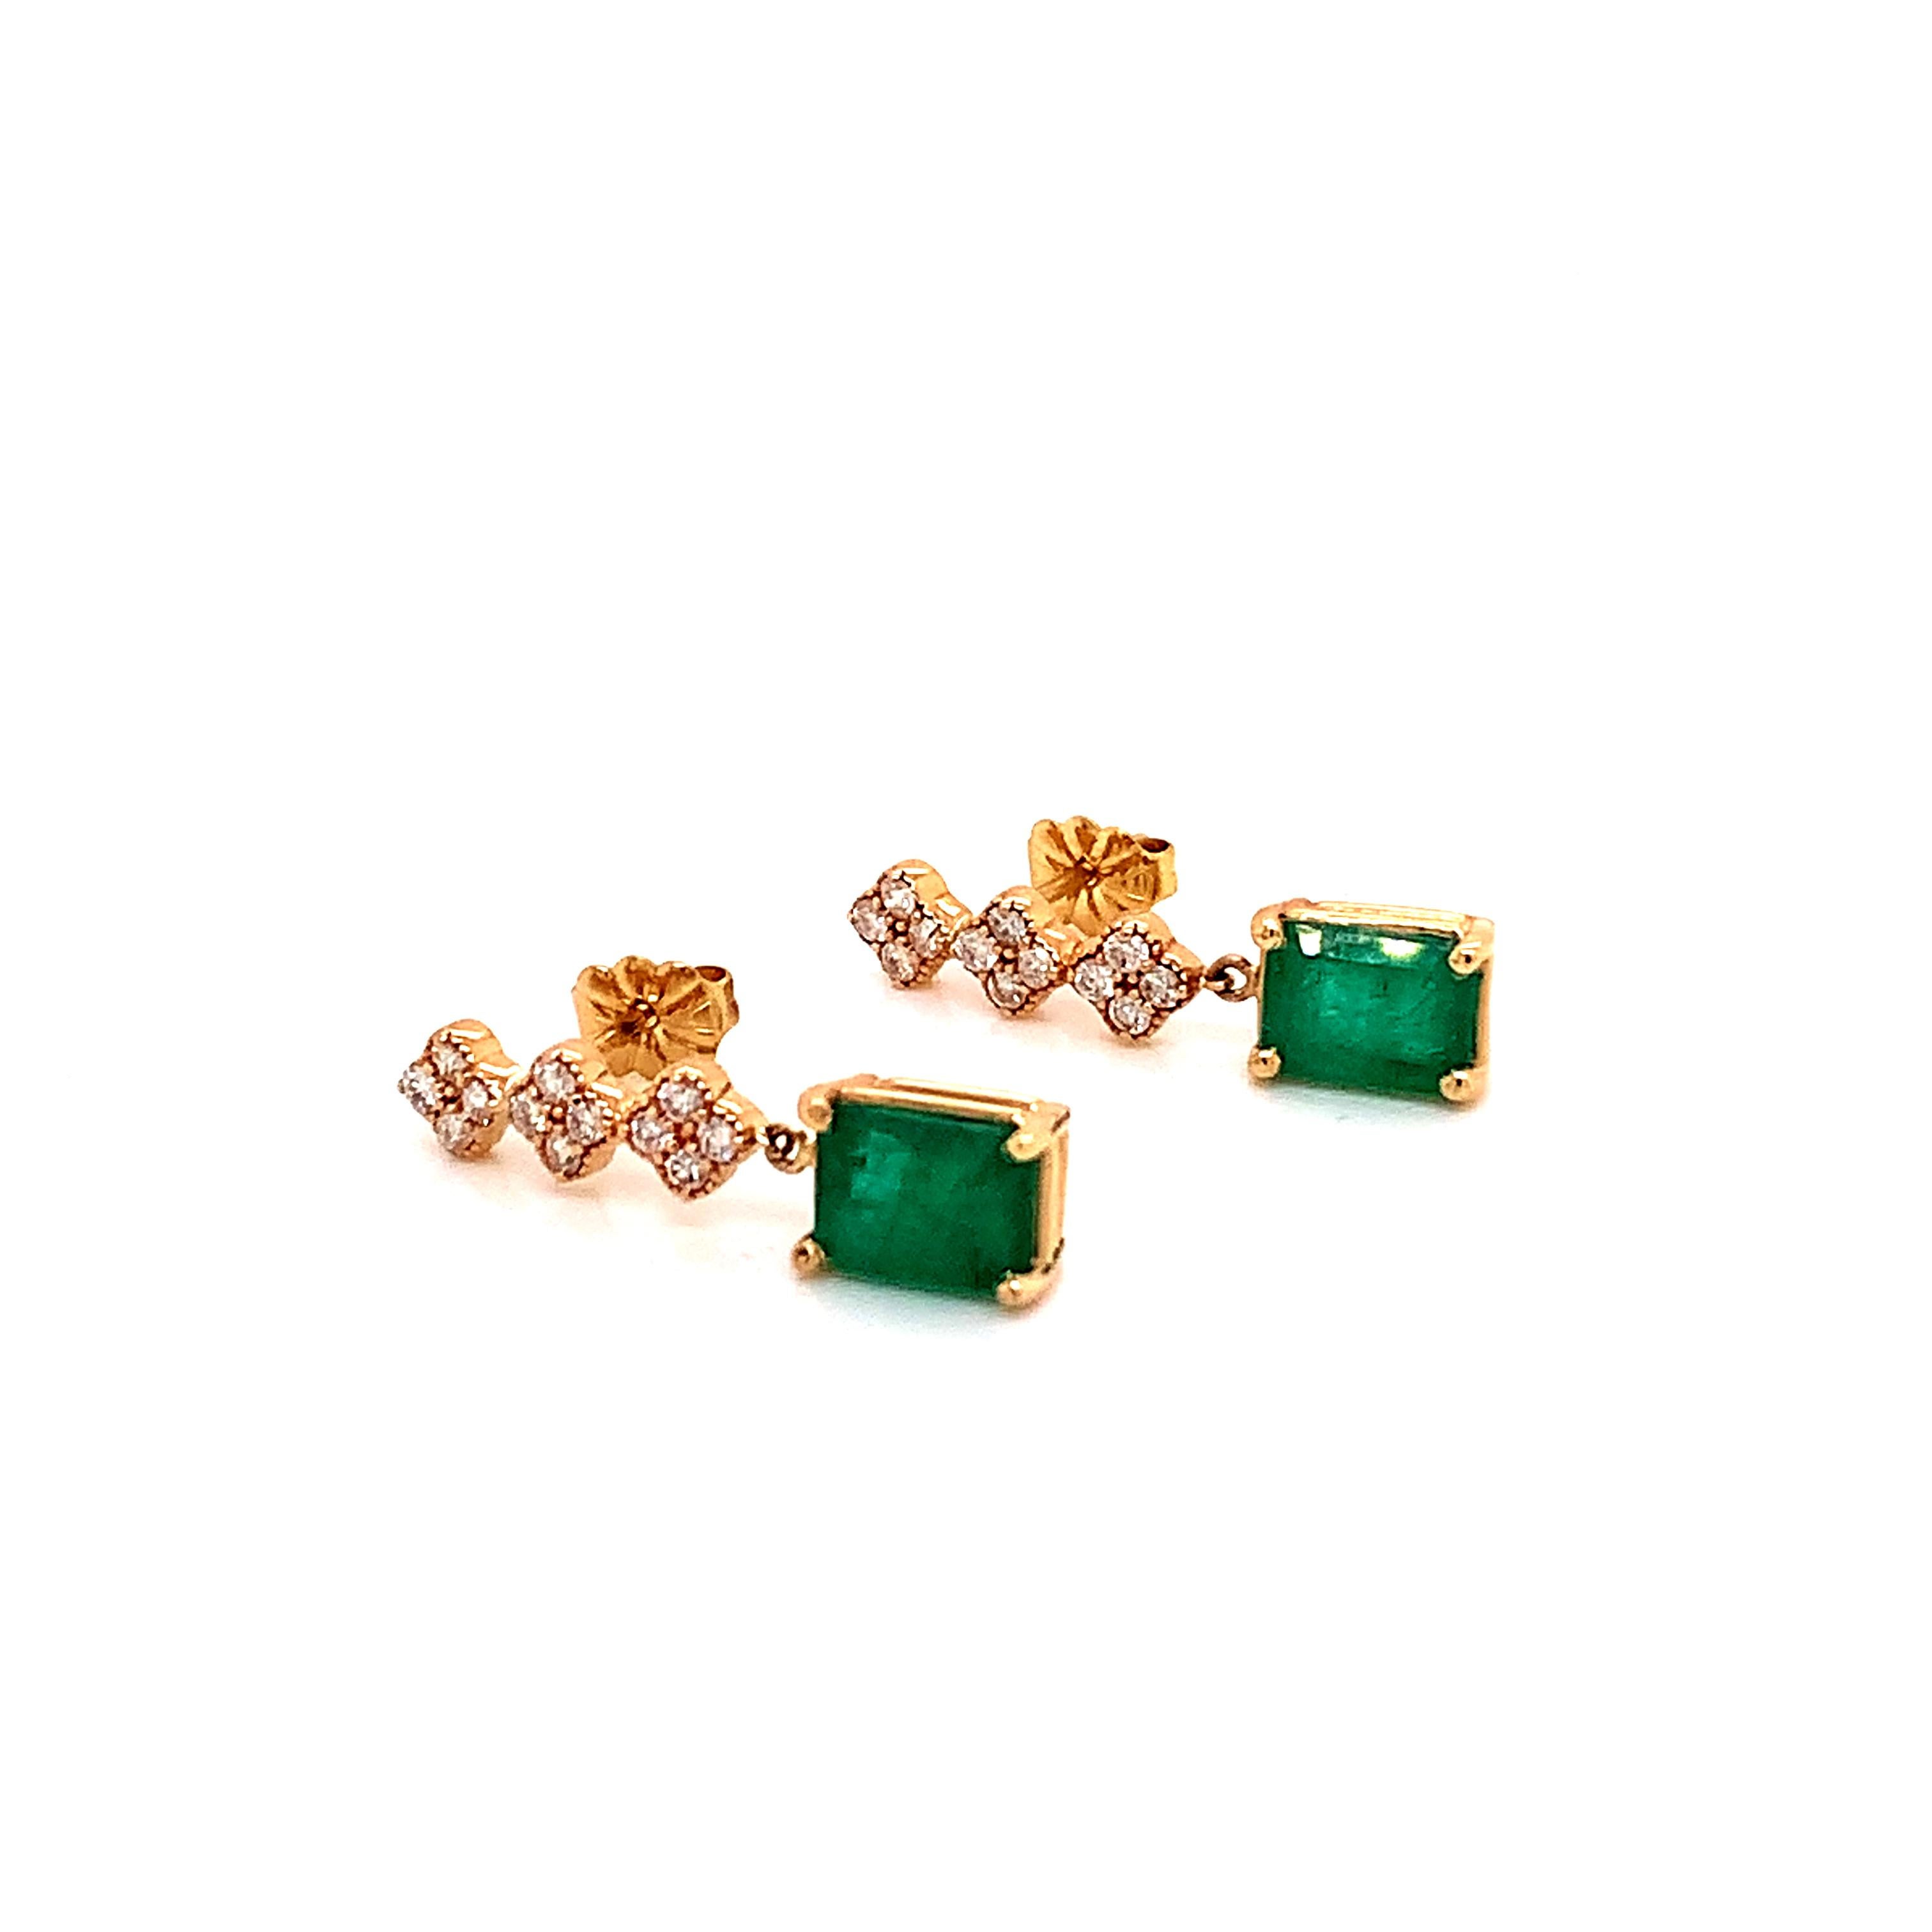 Emerald Cut Natural Emerald Diamond Earrings 14k Gold 3.25 TCW Certified